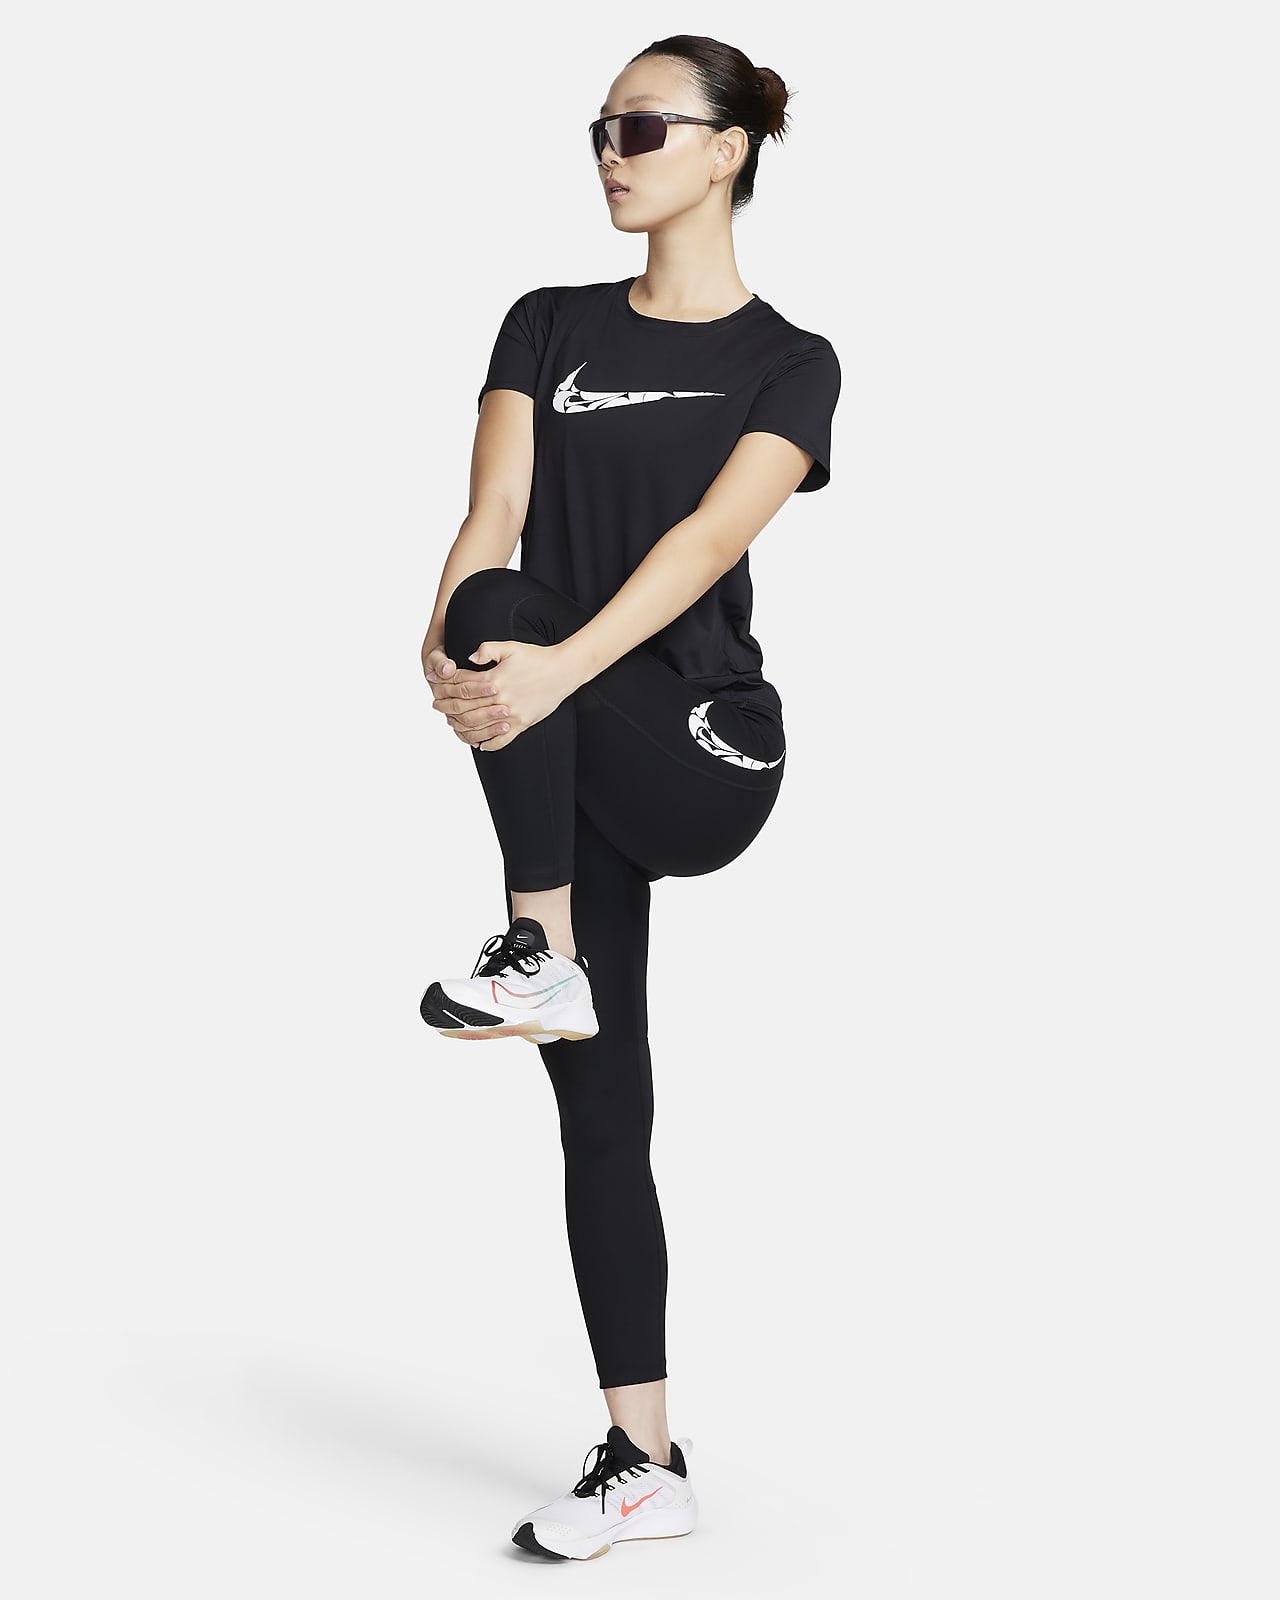 Nike Dri-FIT Swoosh Women's Running Tank Top. Nike SG